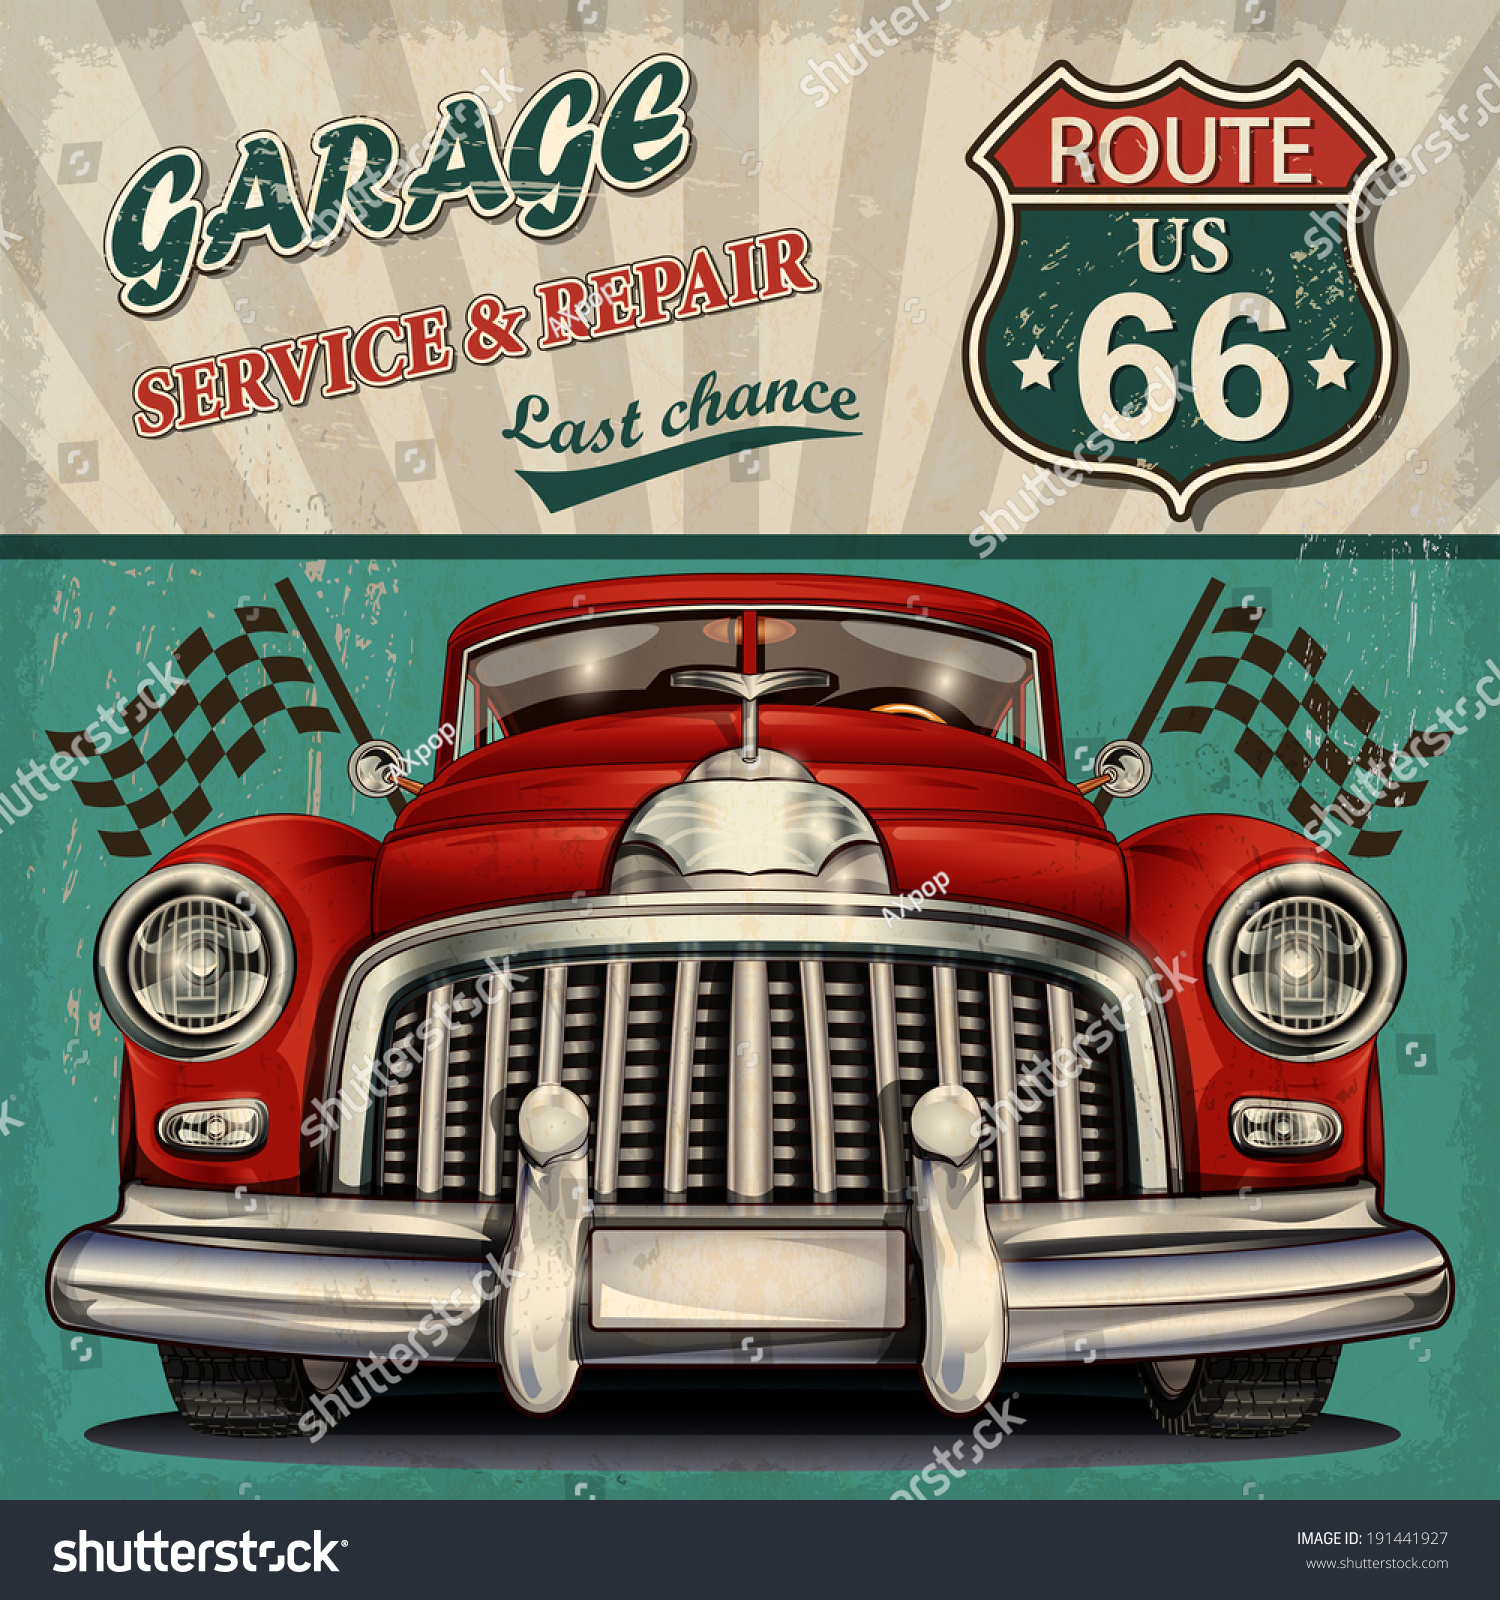 Vintage Garage Retro Poster Stock Vector Illustration 191441927 ...